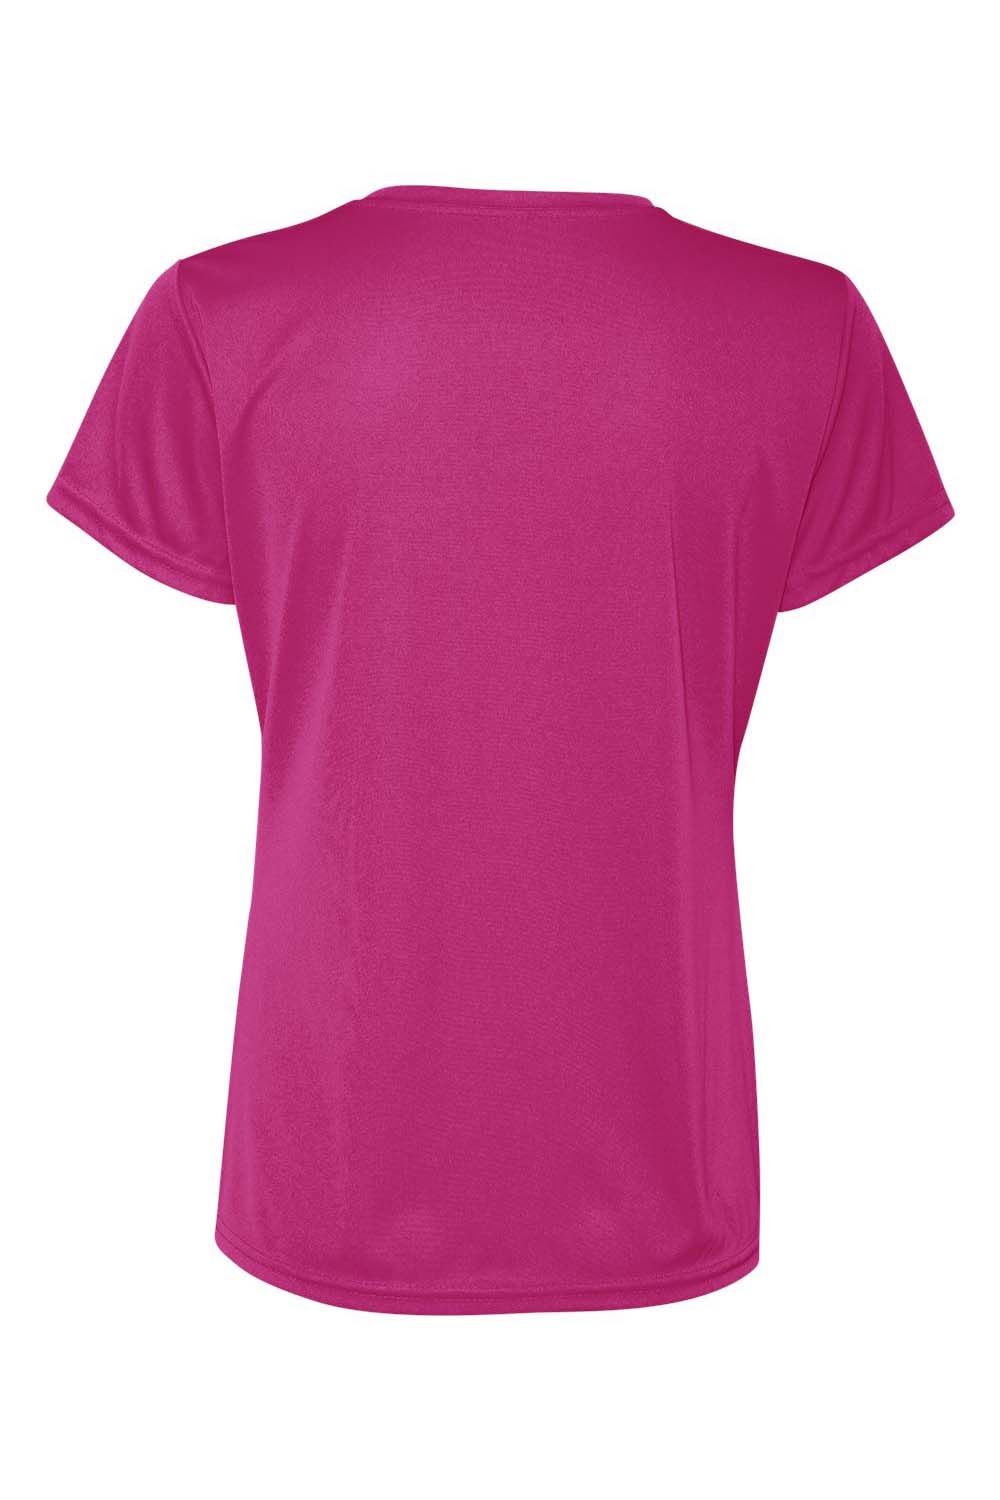 Augusta Sportswear 1790 Womens Moisture Wicking Short Sleeve V-Neck T-Shirt Power Pink Model Flat Back